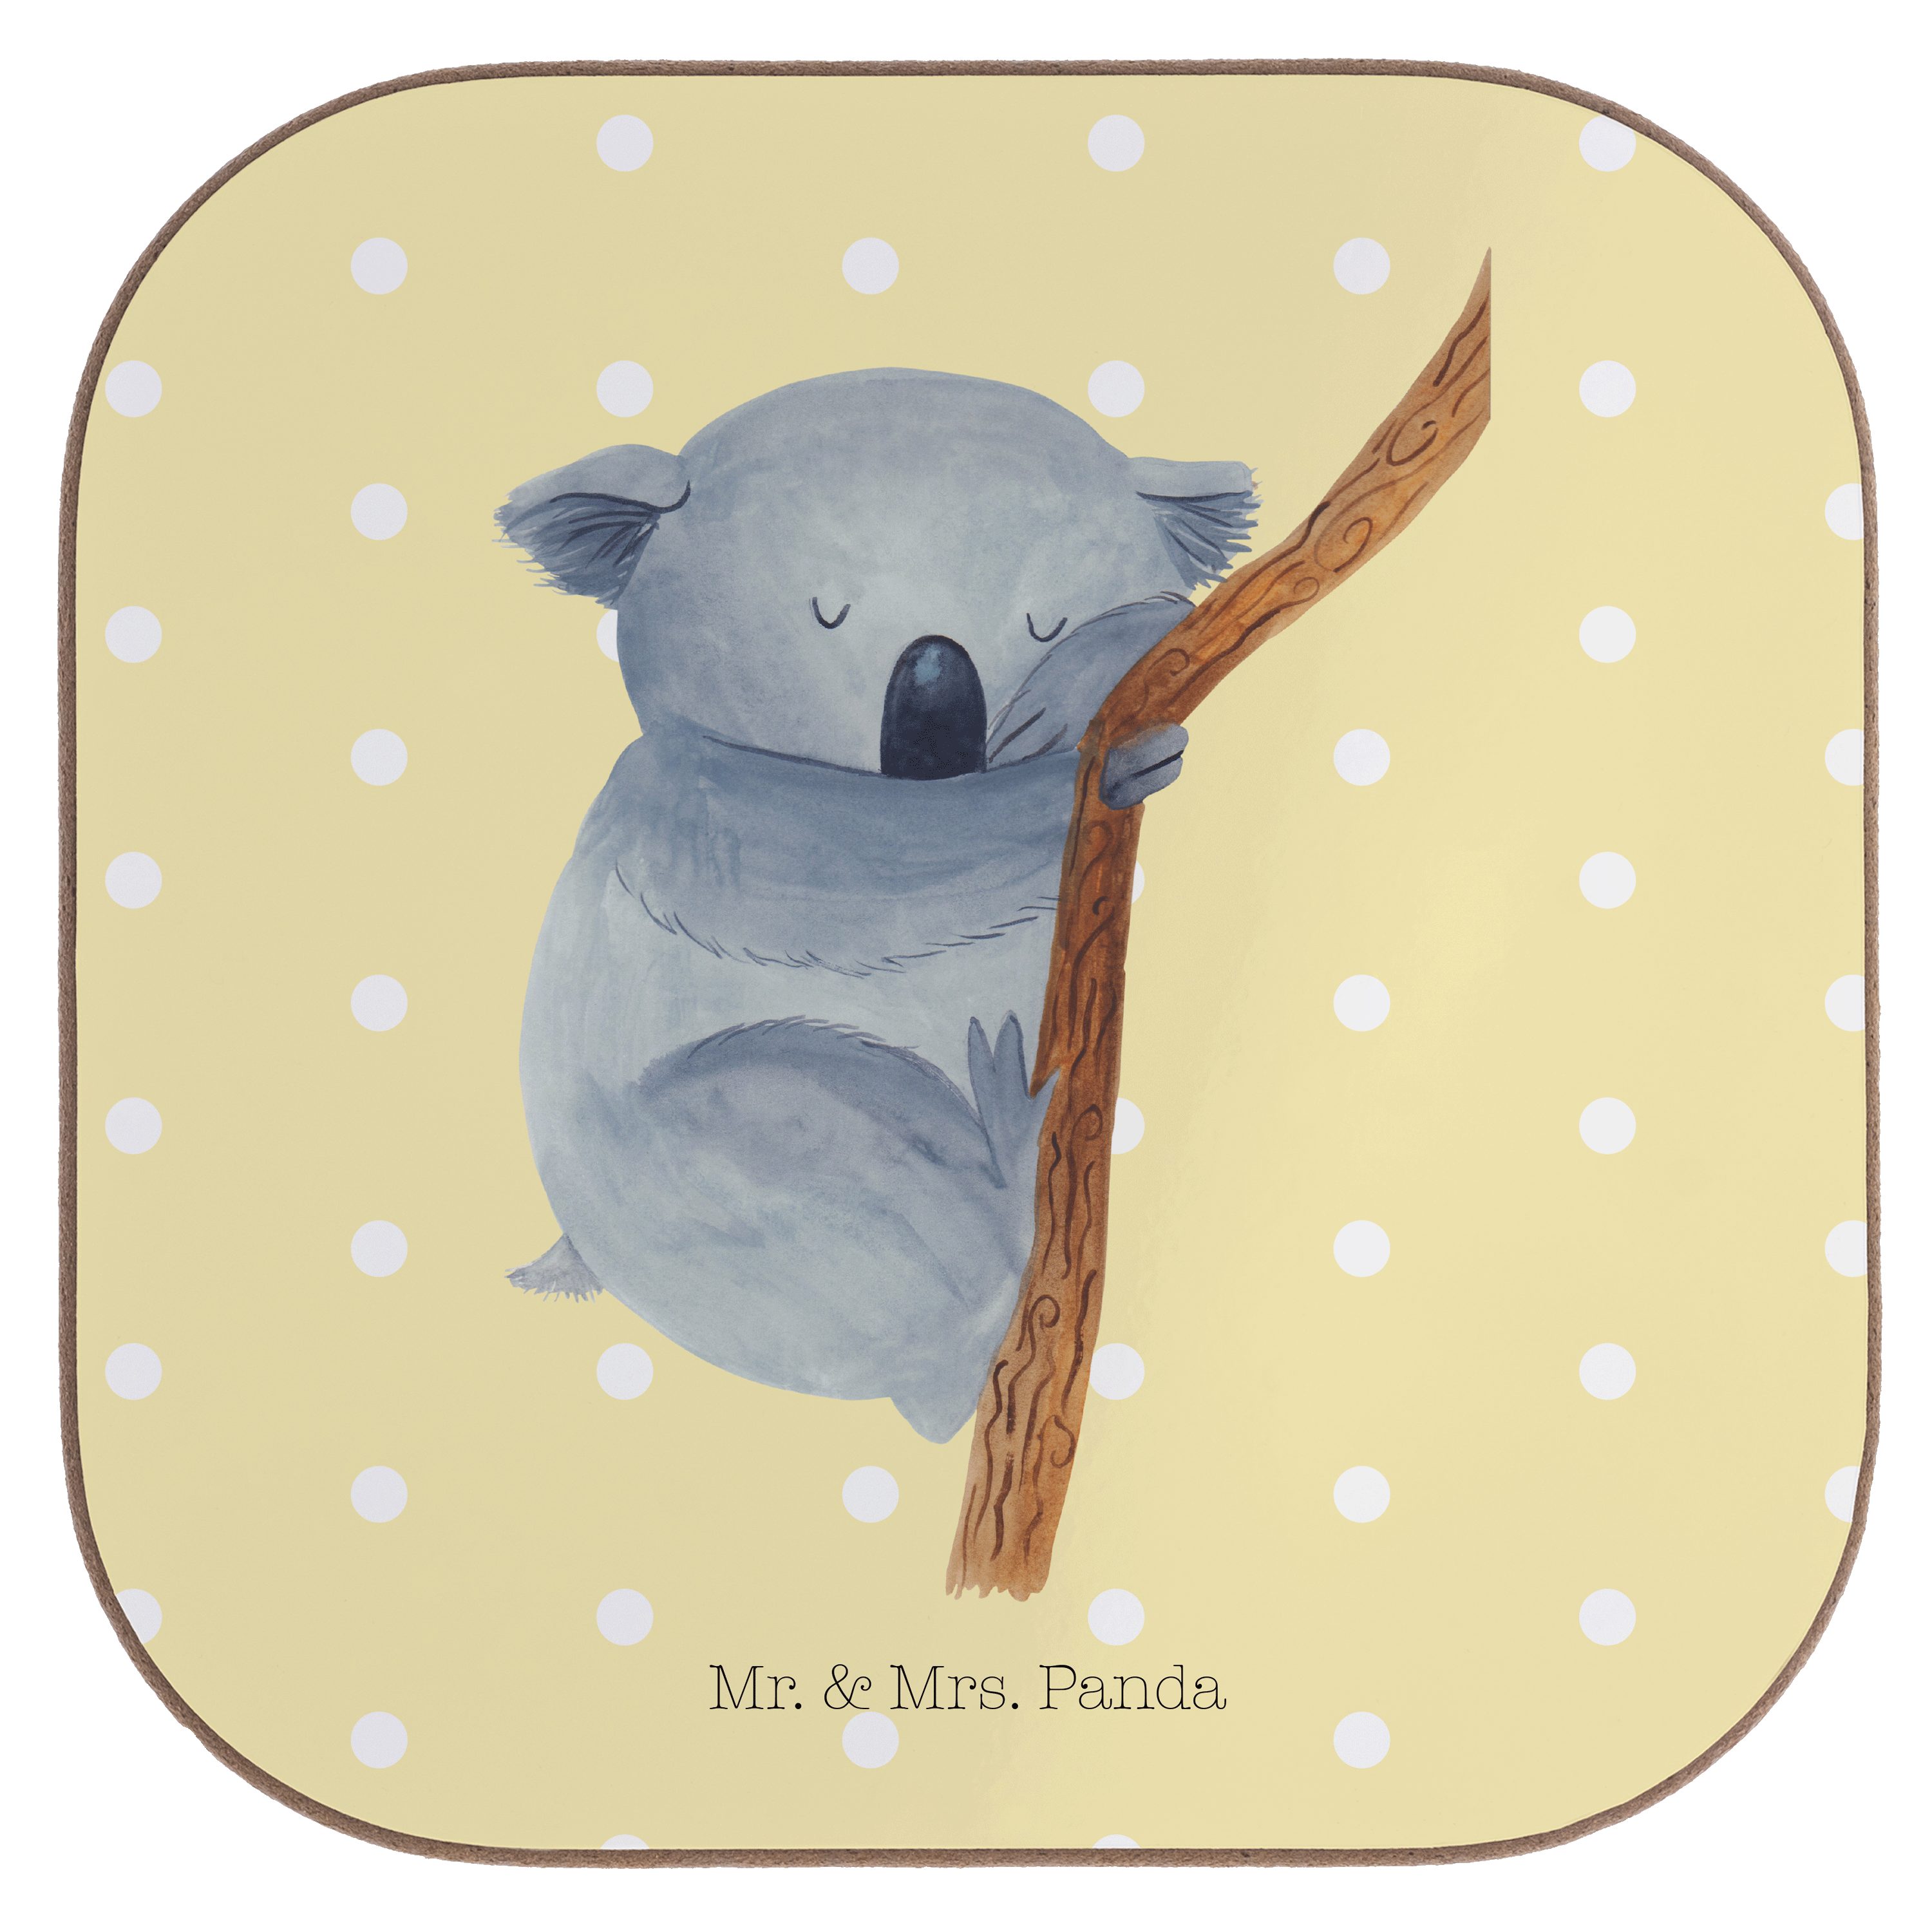 Mr. & Mrs. Panda - - Koalabär Getränkeuntersetzer Geschenk, Gläser, Pastell 1-tlg. Gelb Untersetzer lustig, Traum